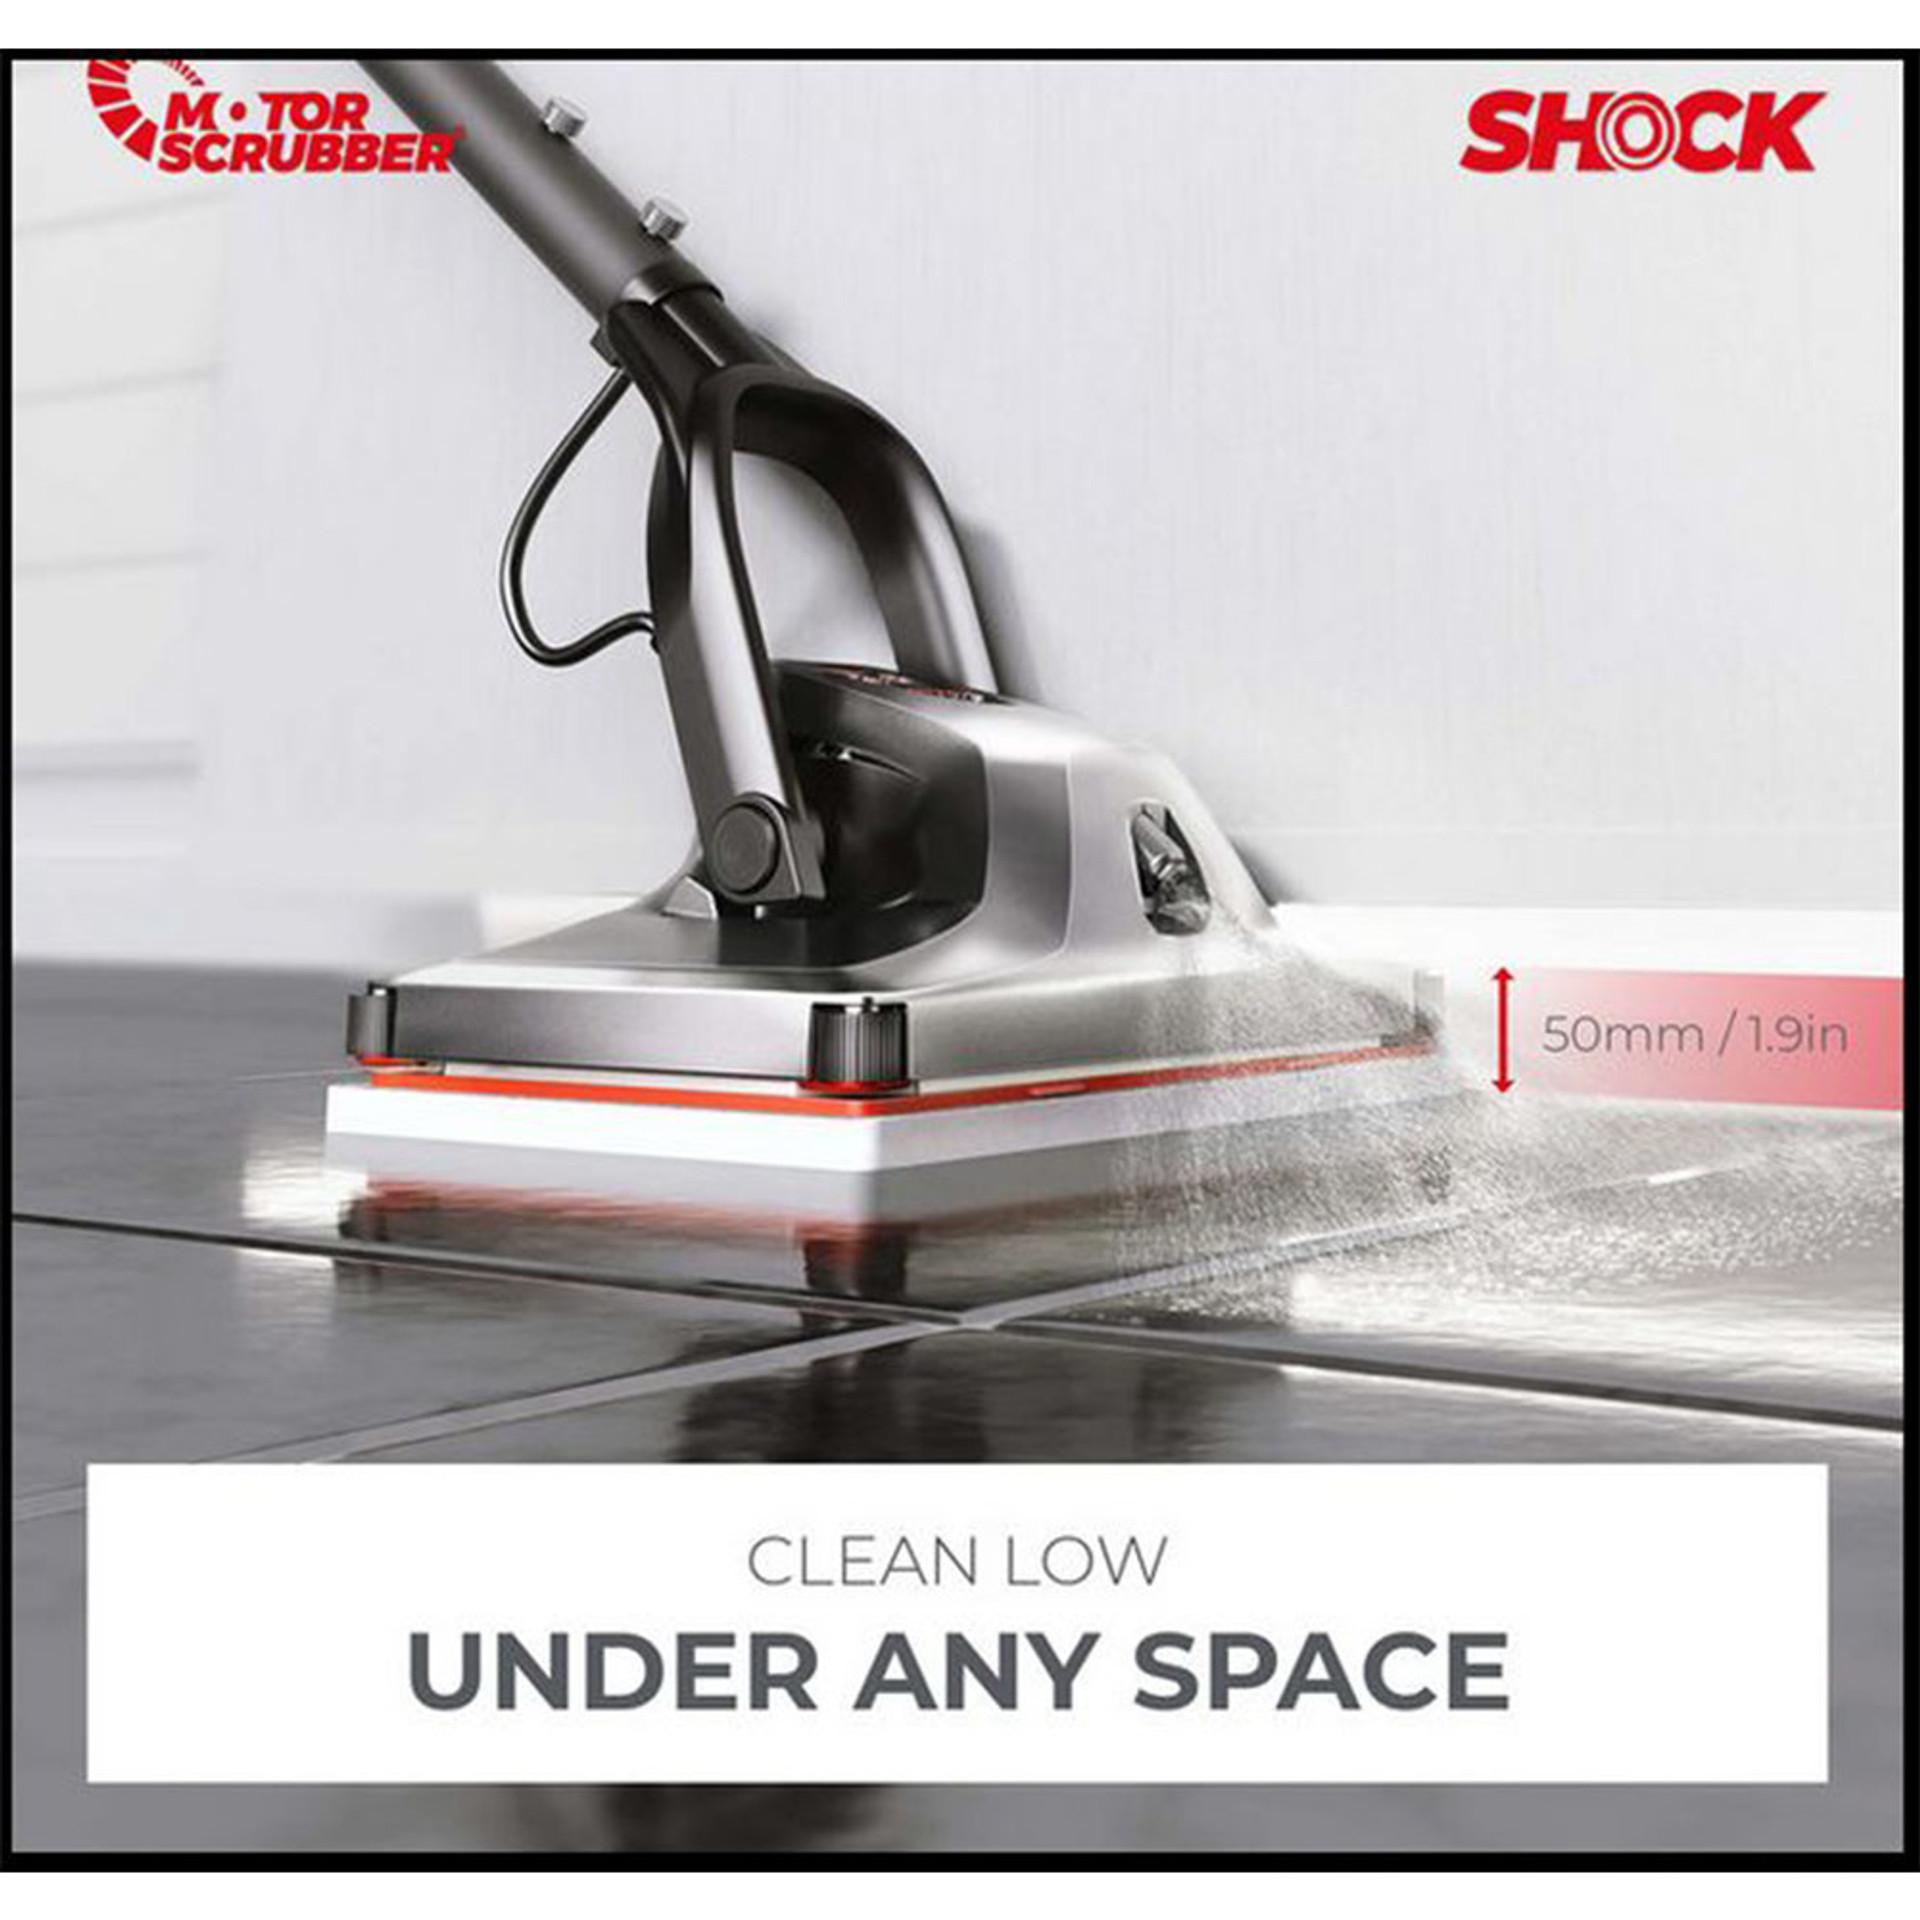 MotorScrubber SHOCK  Small Floor Scrubbing Machine